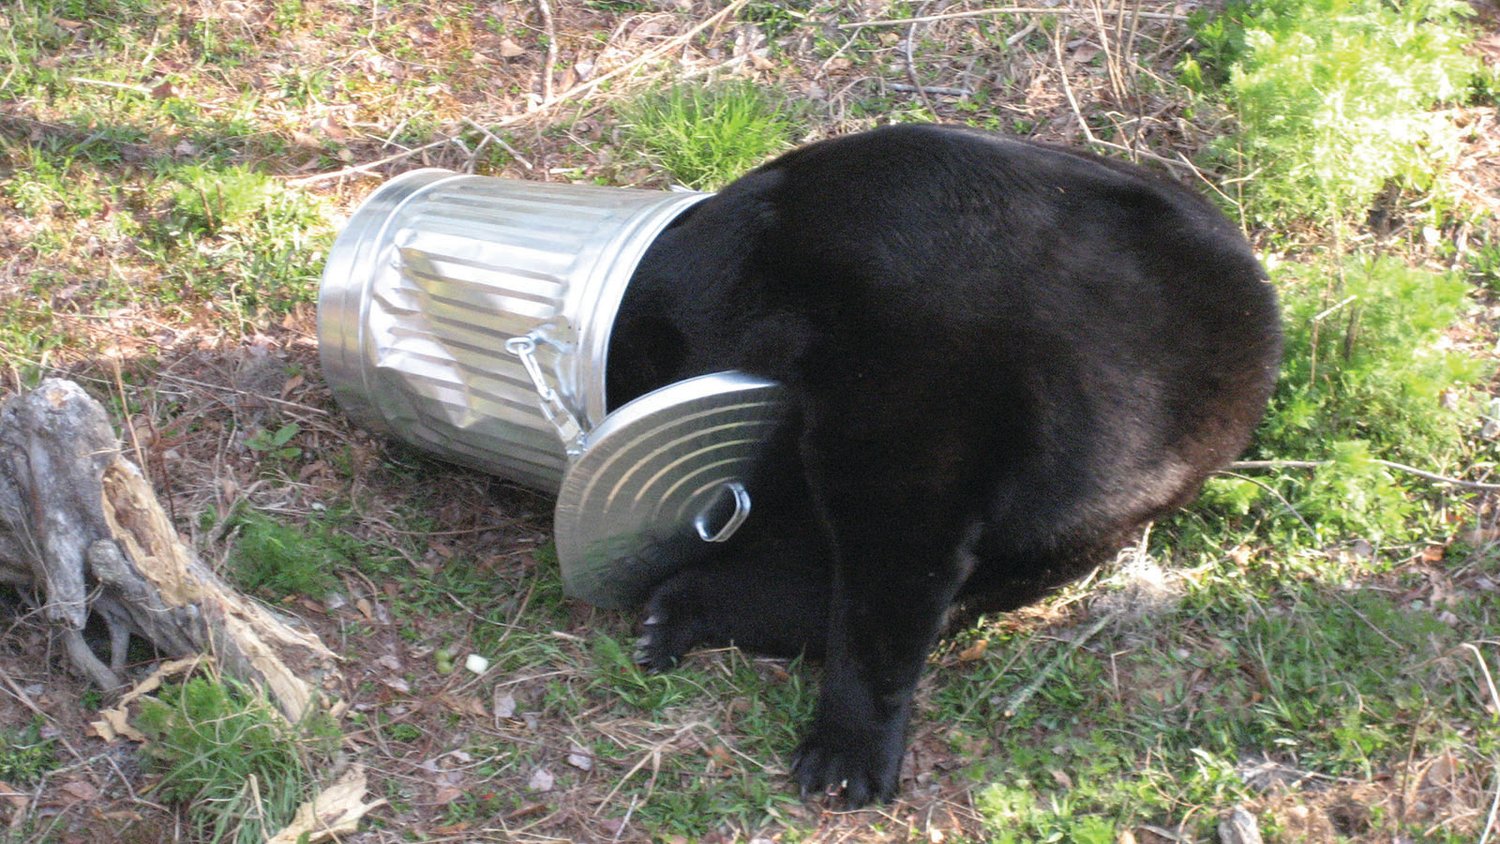 Florida Black Bear rummaging through a garbage can.